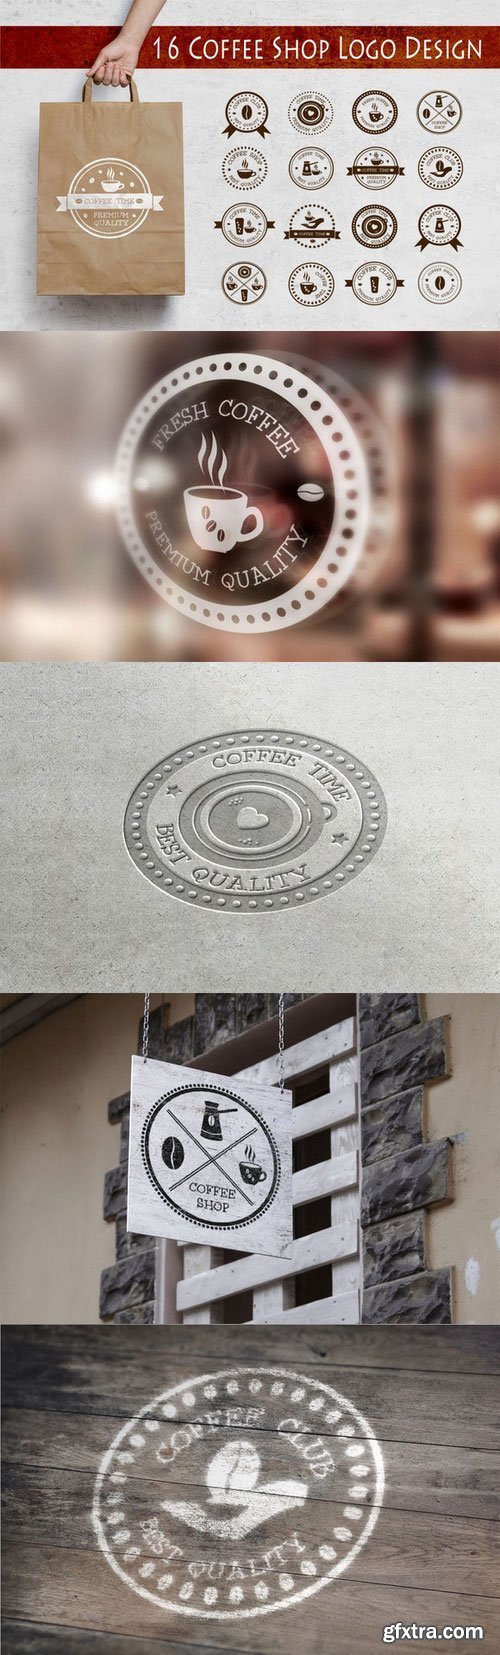 CM - 16 Coffee Shop Logo Design 325802